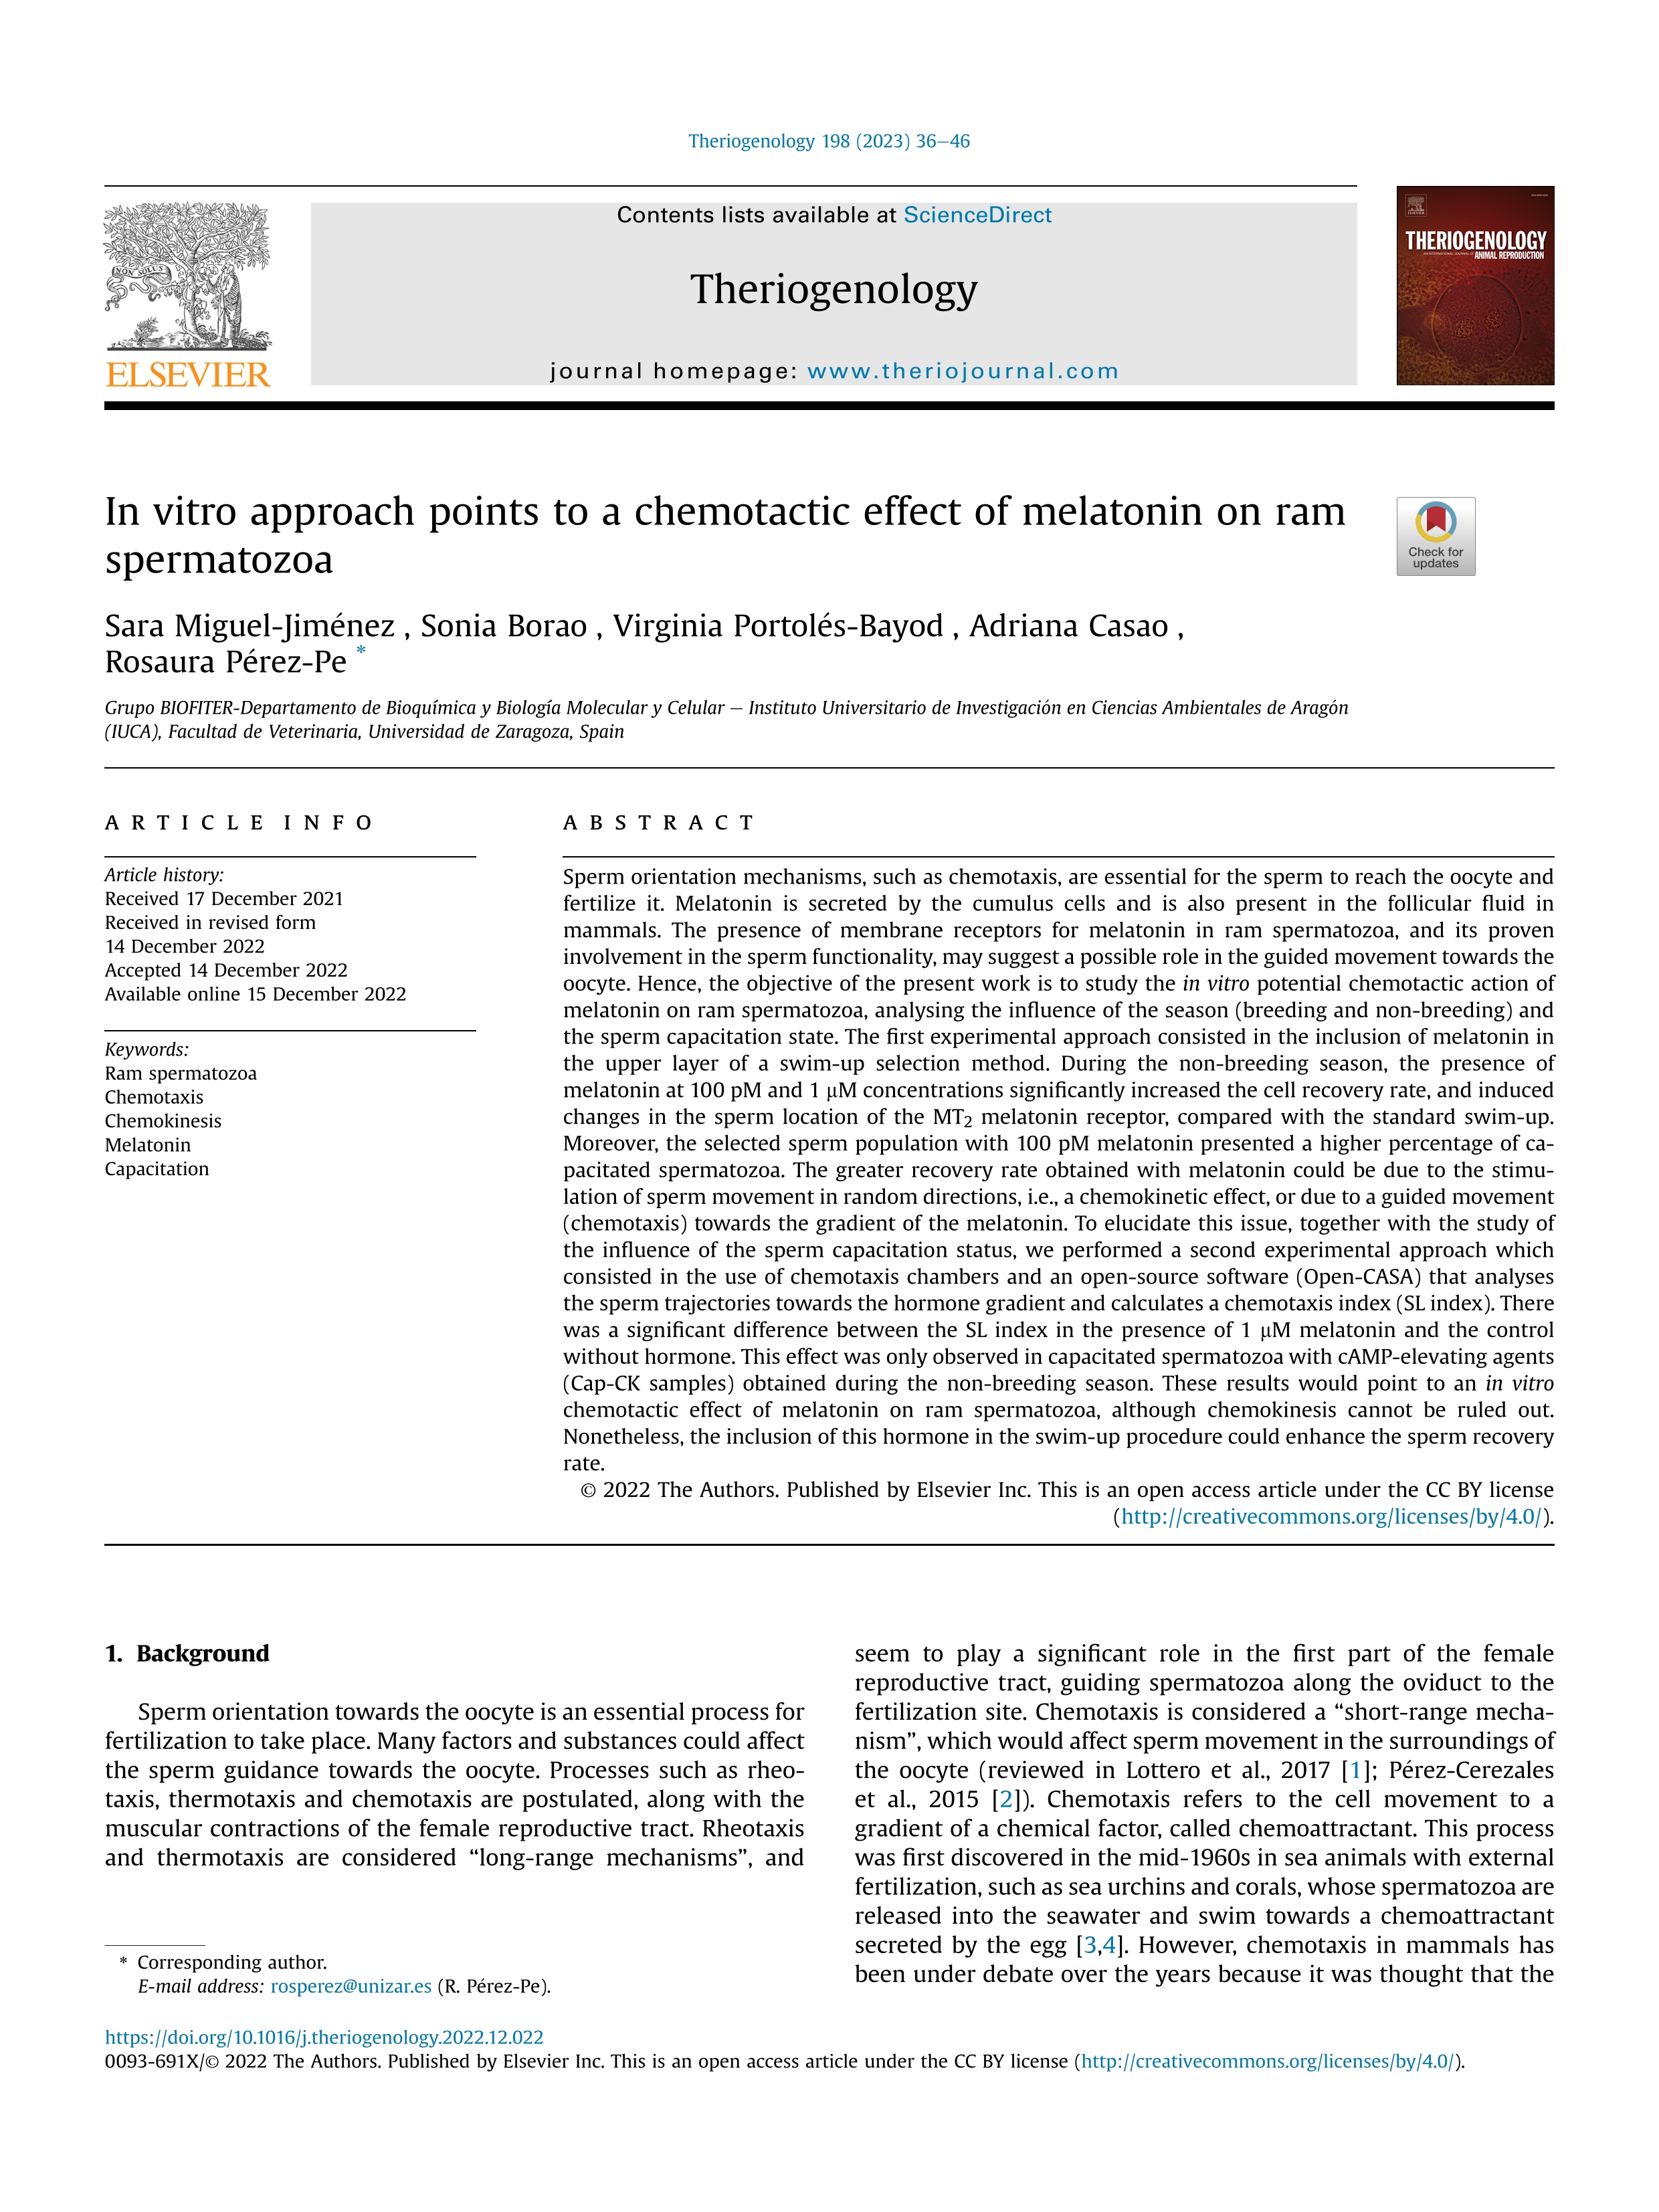 In vitro approach points to a chemotactic effect of melatonin on ram spermatozoa